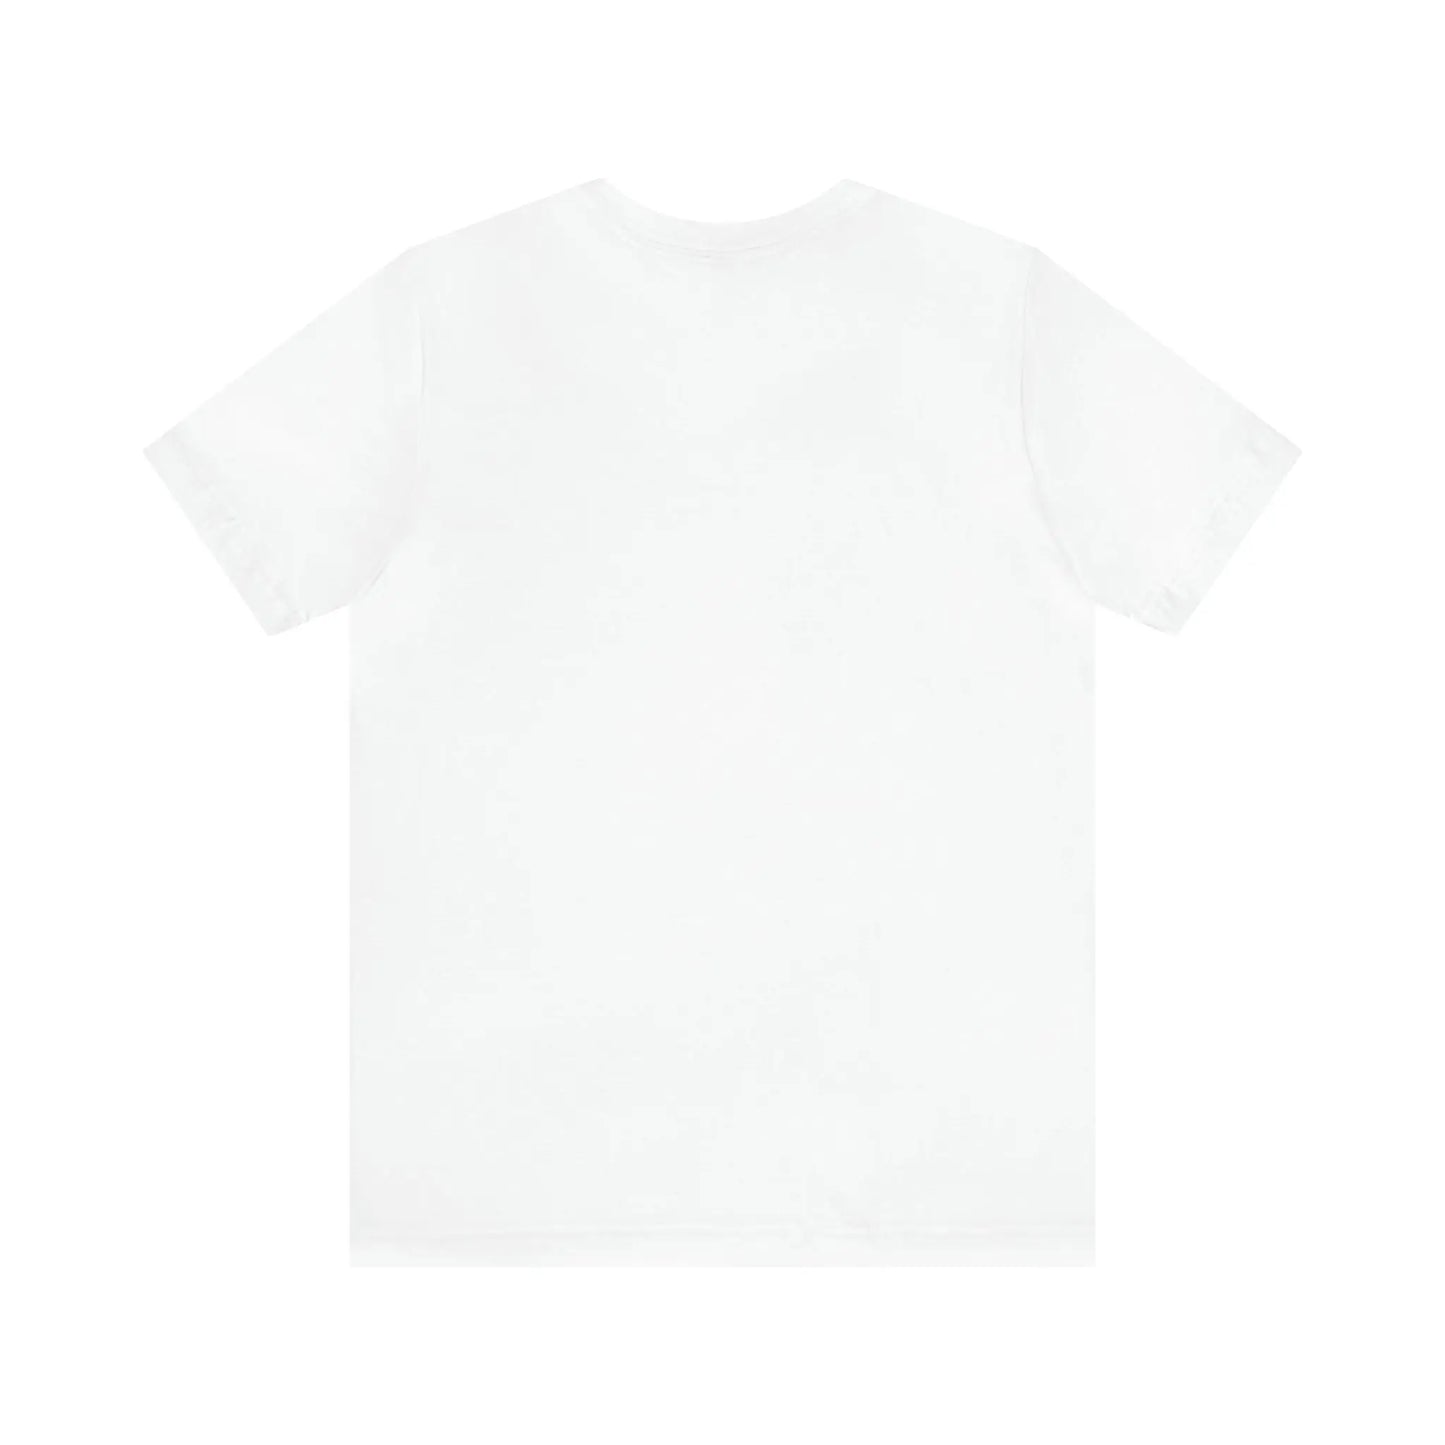 Stay Present with Retro 'Log Off' Smiley Face T-Shirt - papercraneco